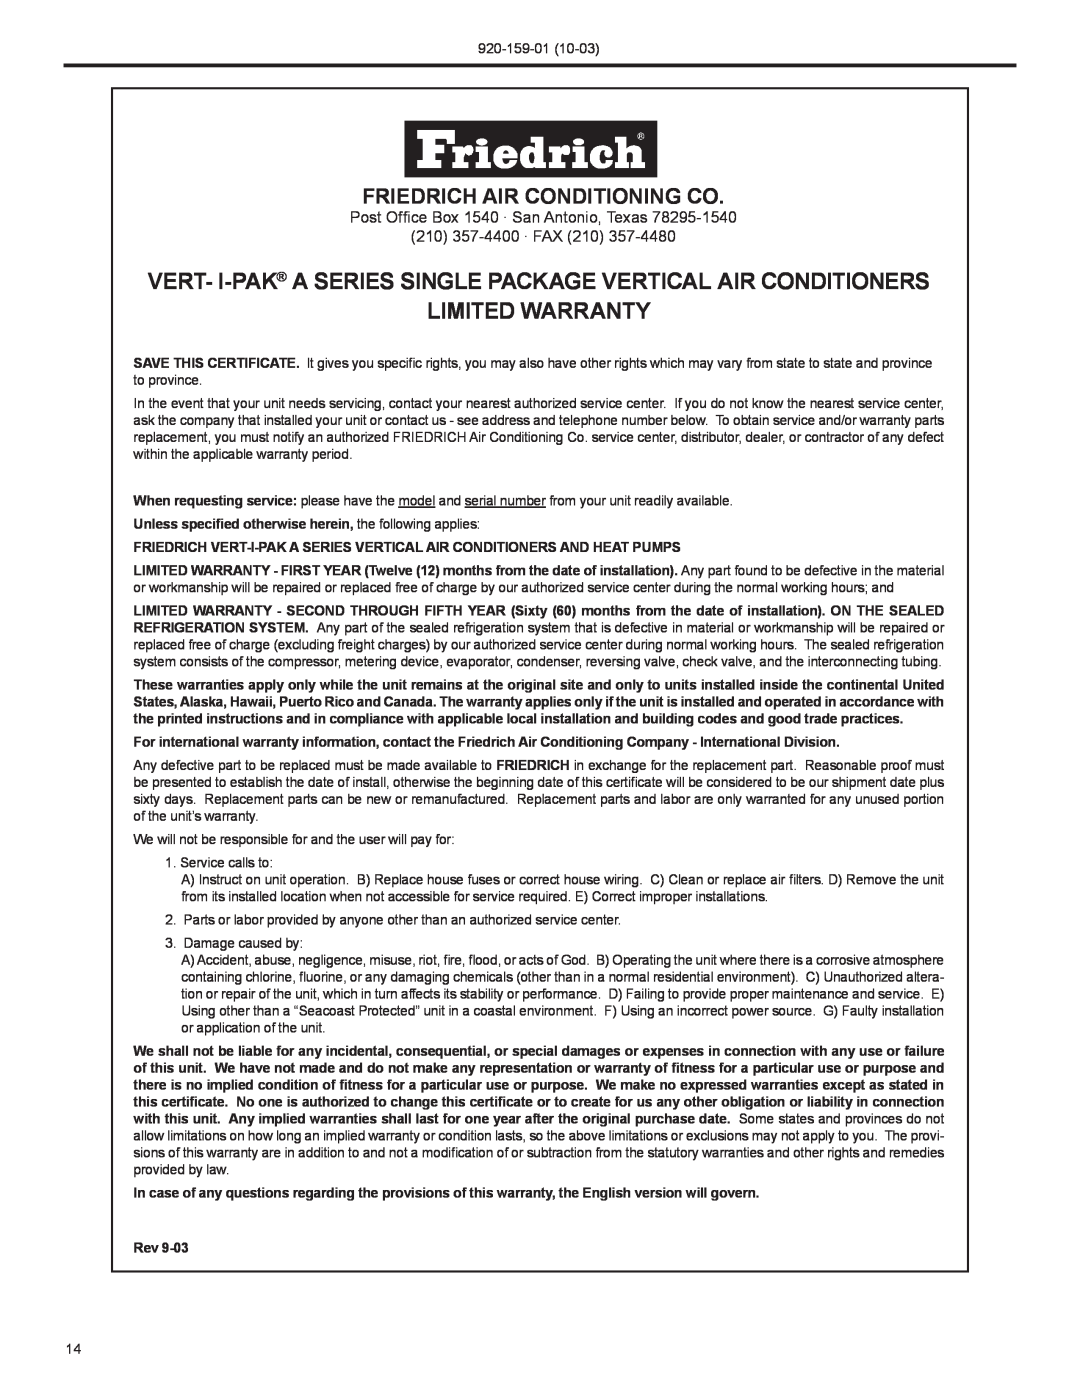 Friedrich 920-159-01 (10-03) operation manual Limited Warranty, Friedrich Air Conditioning Co 